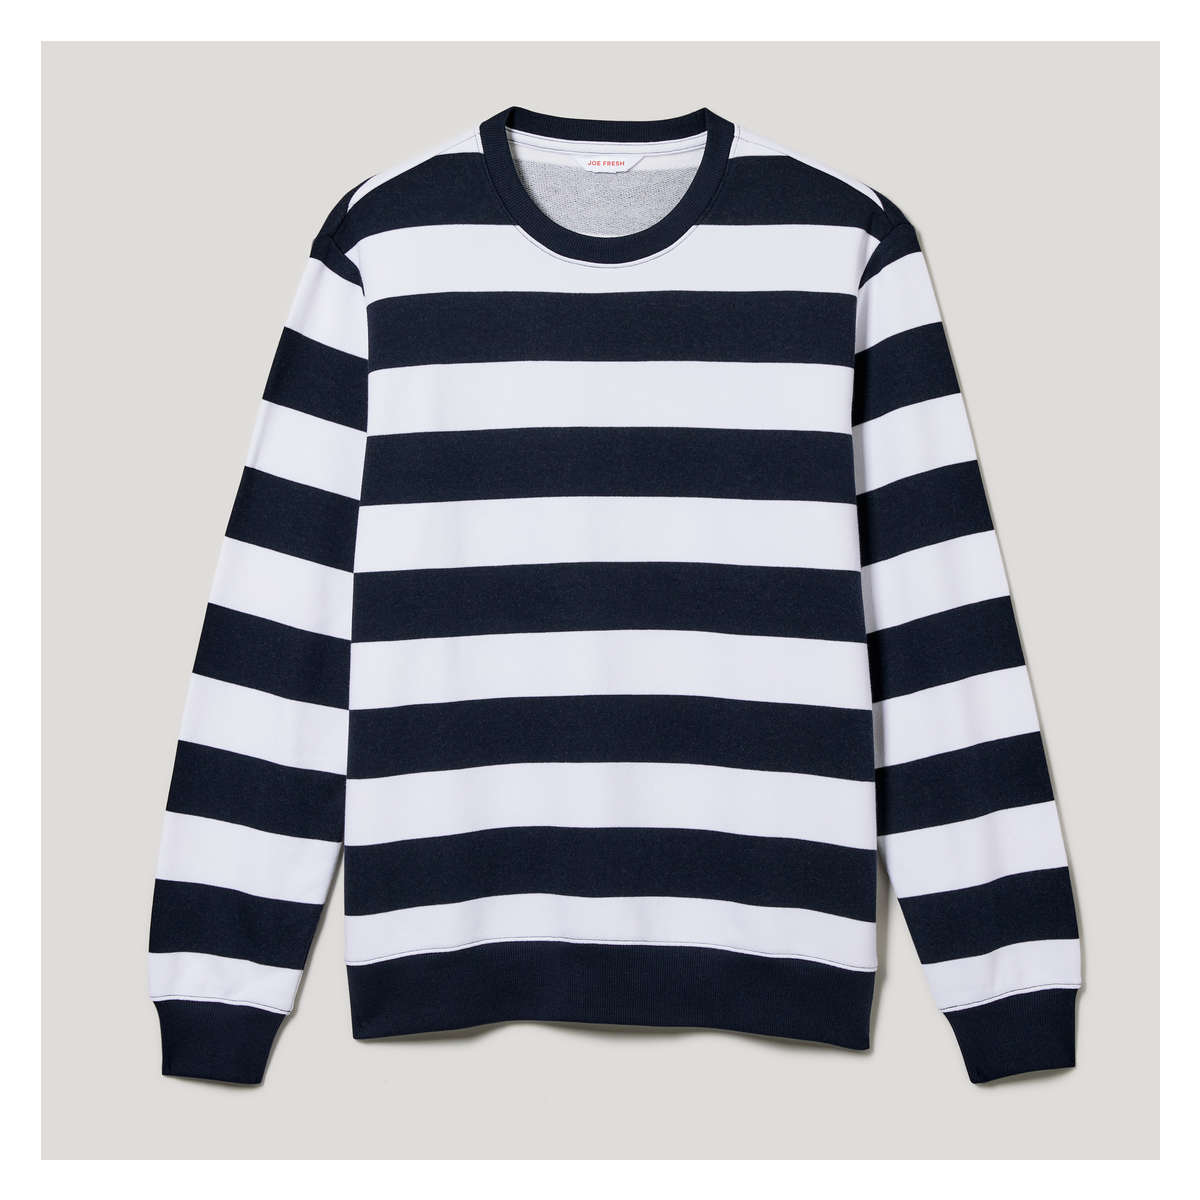 Gender-Free Striped Sweatshirt in Dark Navy from Joe Fresh